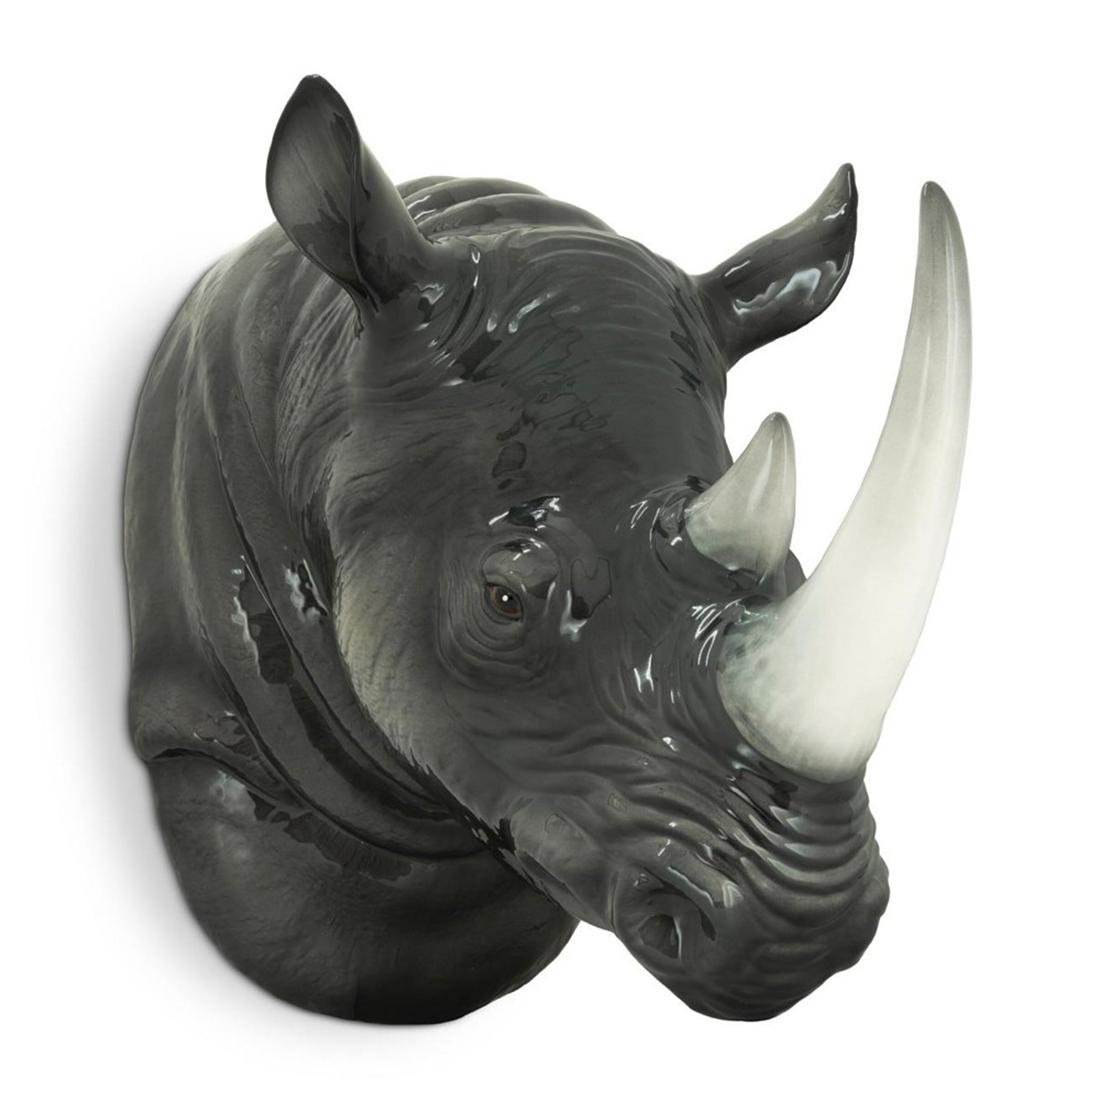 Wall Decoration Rhino Head in
handcrafted ceramic.